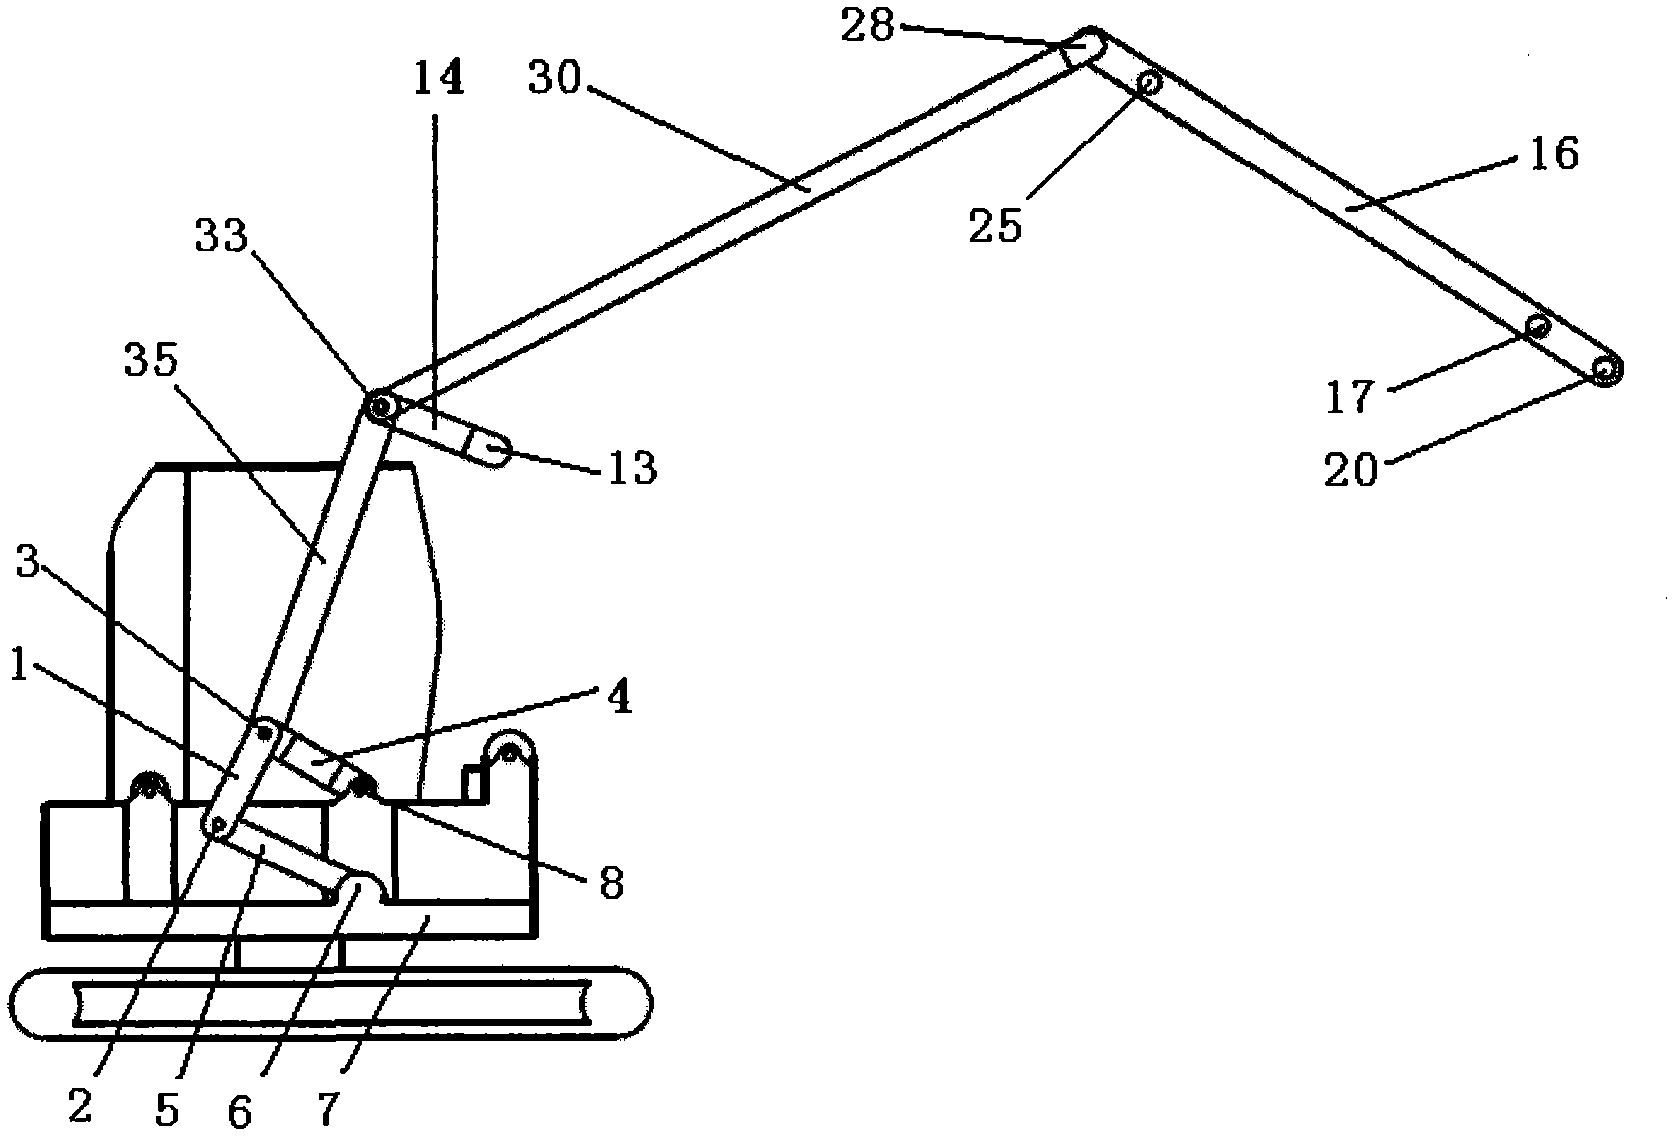 Mechanical electric excavation mechanism